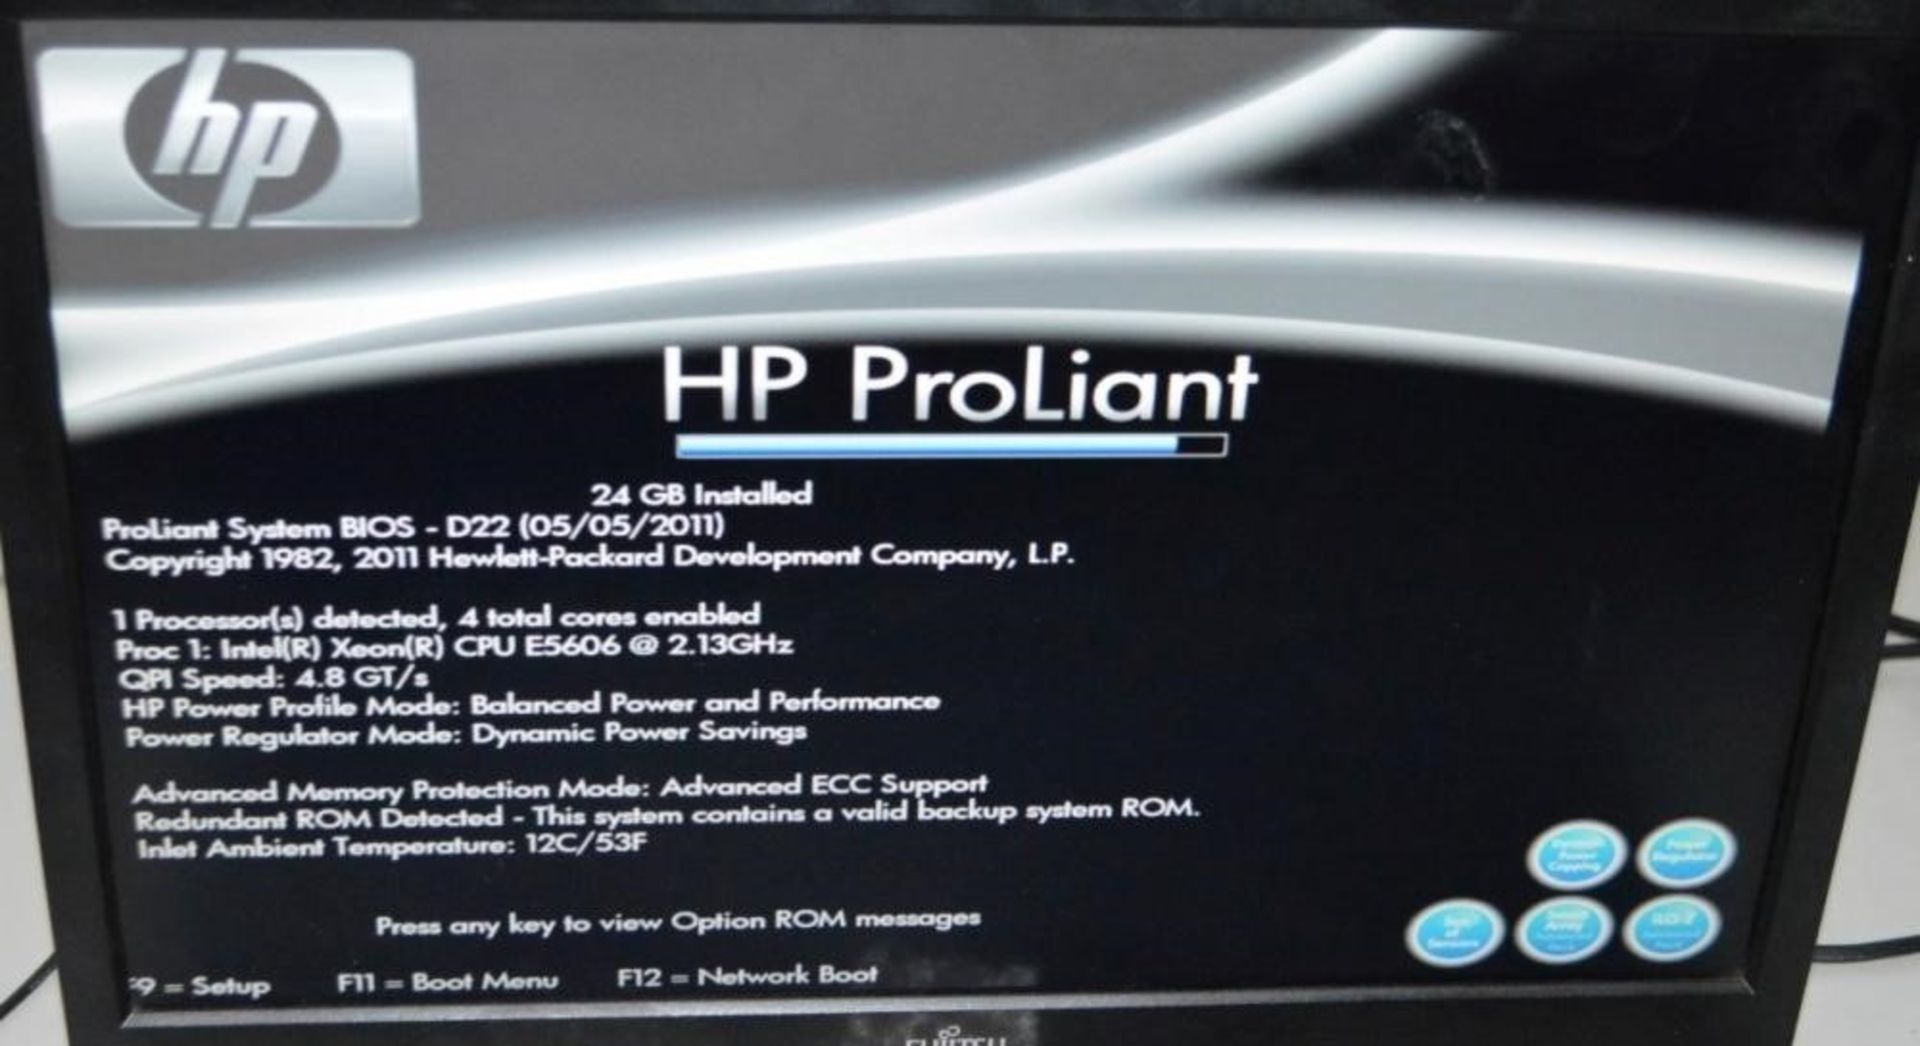 1 x HP Proliant ML350 G6 Server Intel Xeon E5606 2.13GHz 24GB RAM - Ref TP399 - CL394 - Location: Al - Image 3 of 4